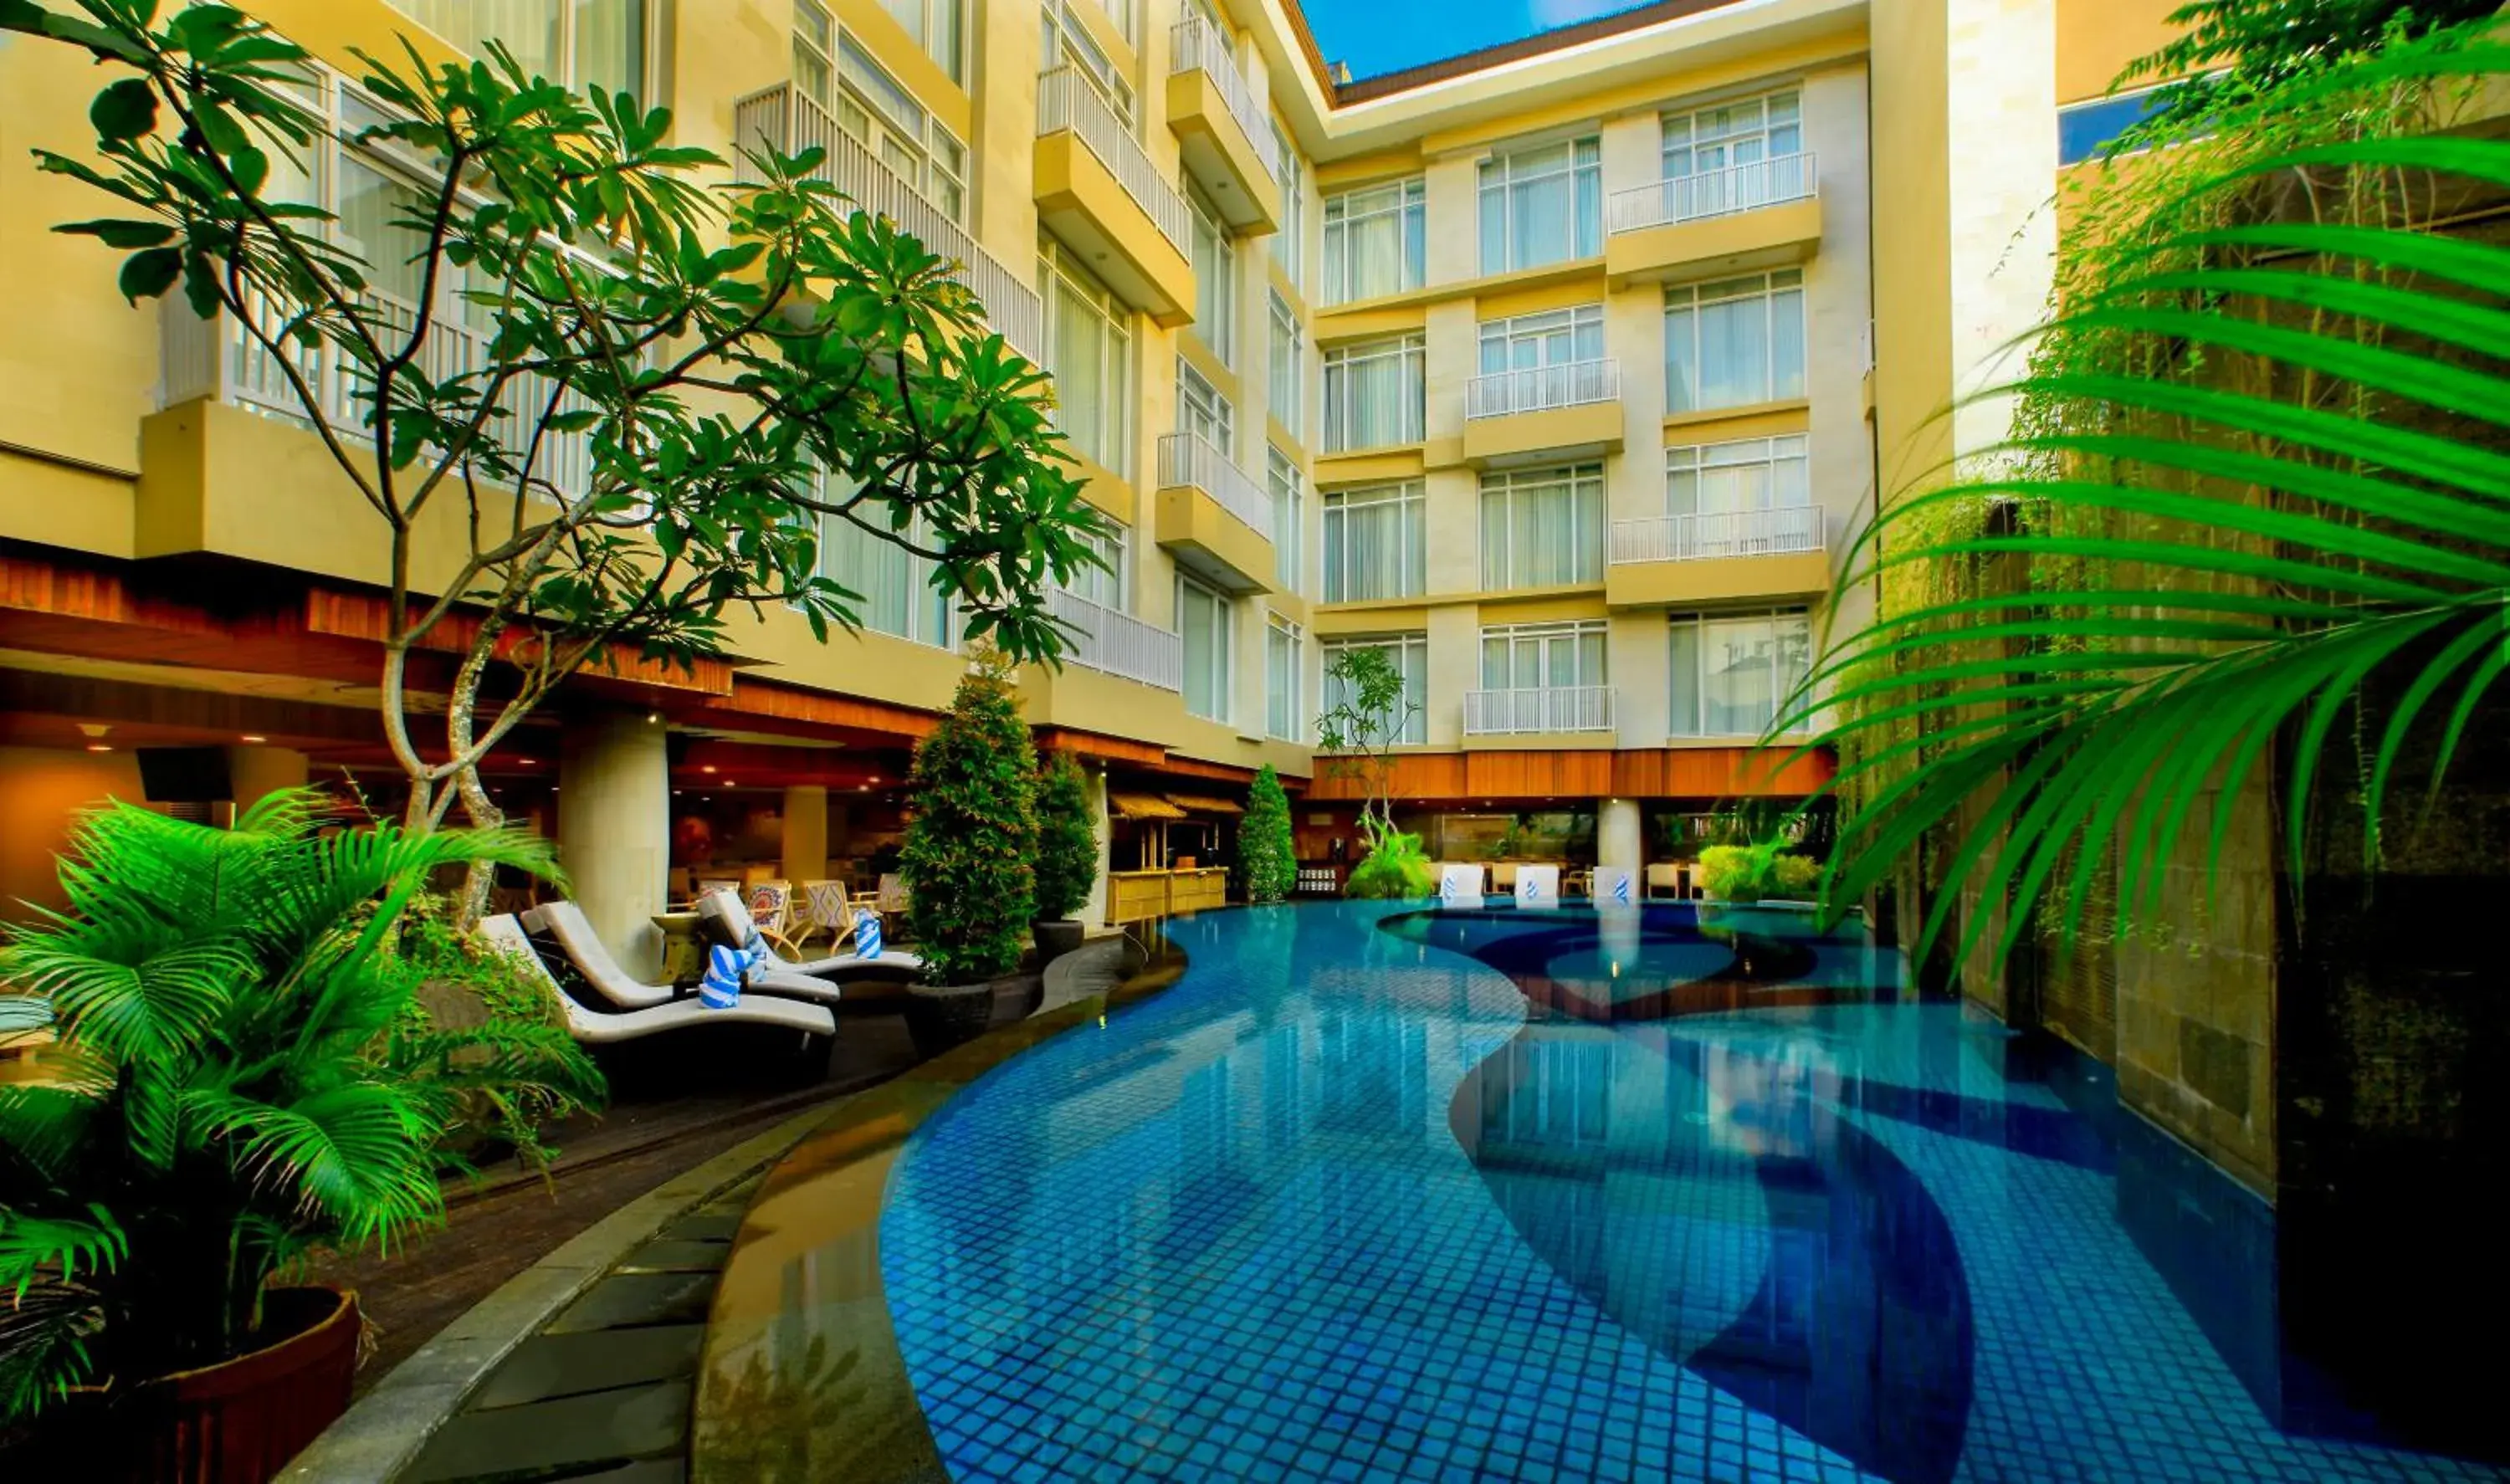 Swimming Pool in Bedrock Hotel Kuta Bali